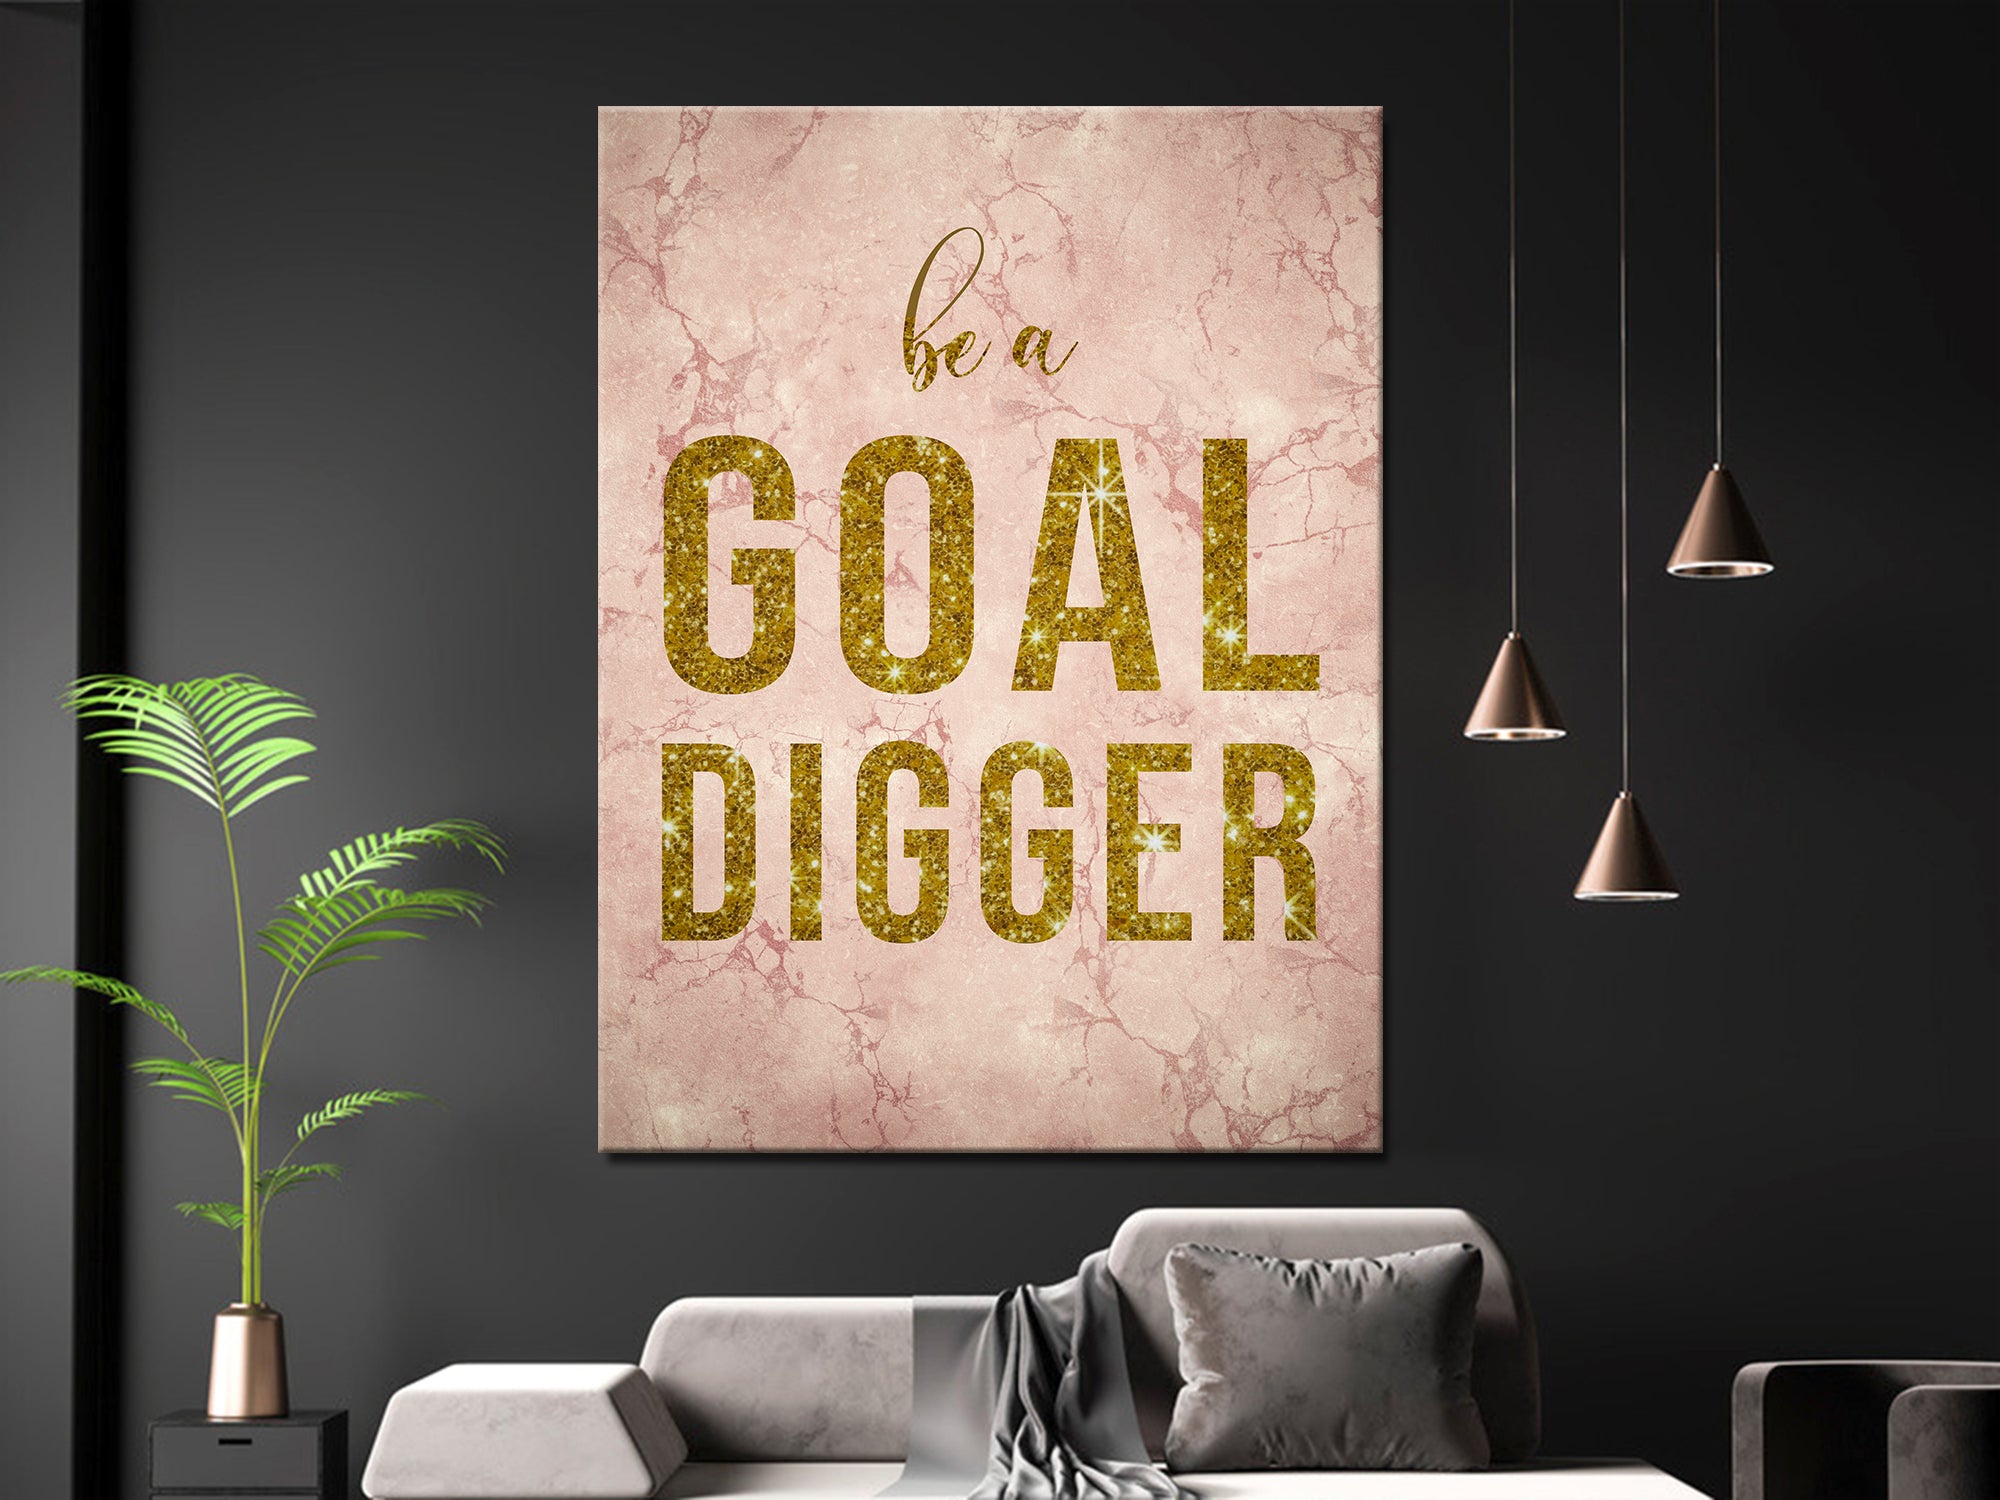 Be A Goal Digger - Canvas Wall Art